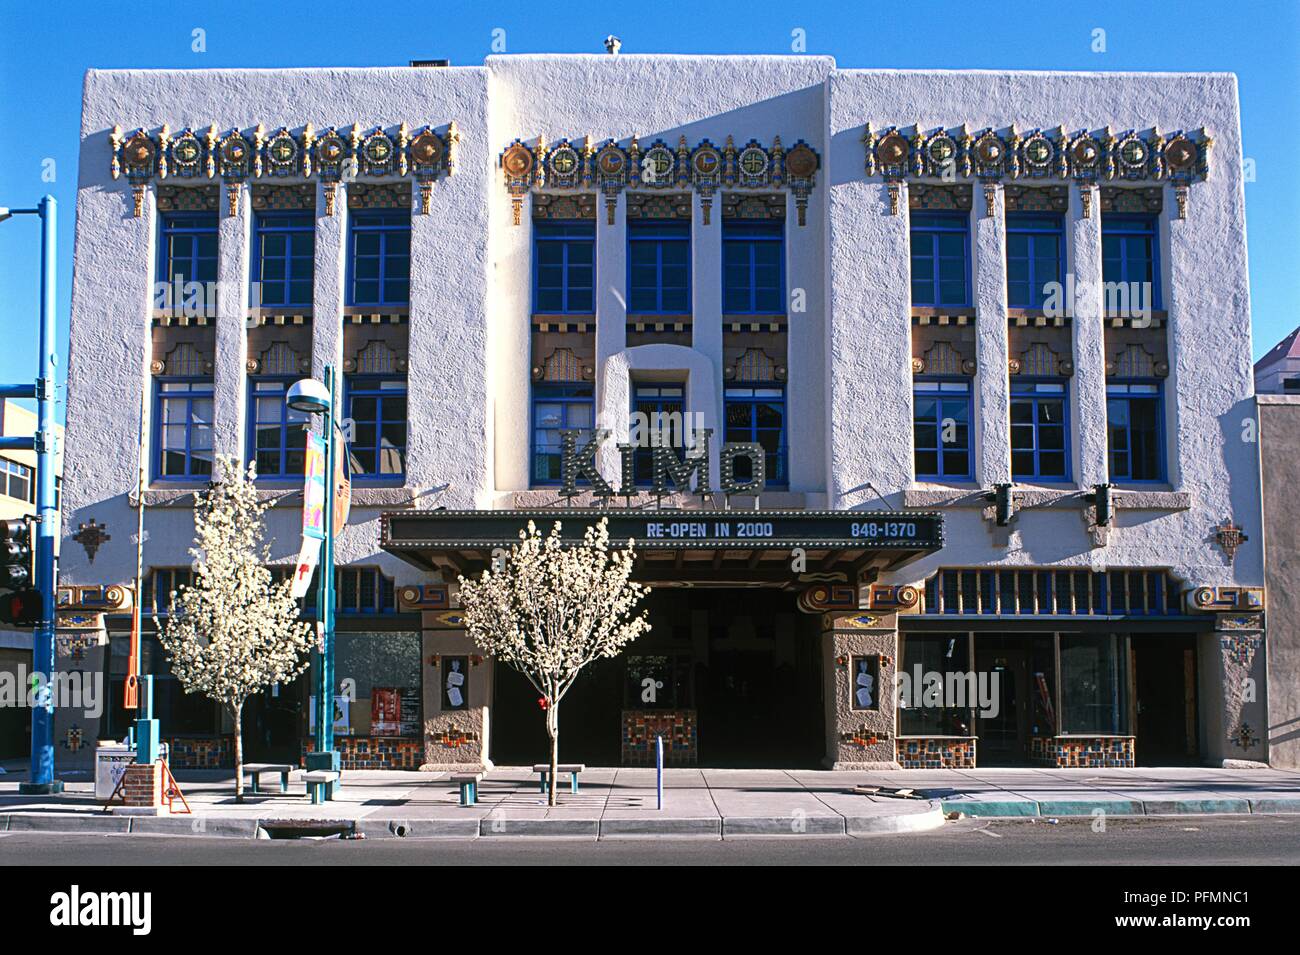 USA, New Mexico, Albuquerque, KiMo Theater, Art déco-Fassade des Theaters, 1927 erbaut Stockfoto